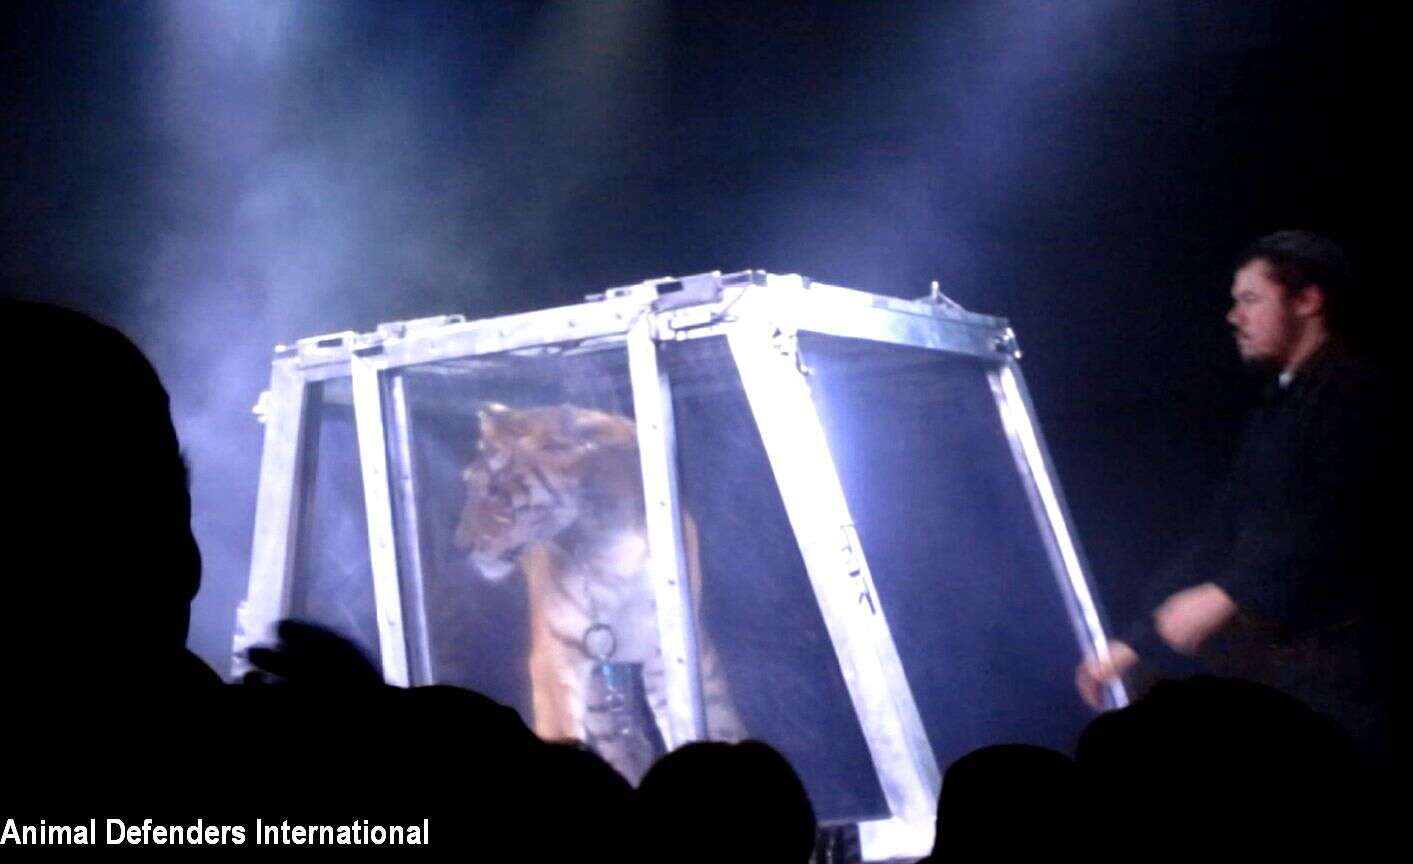 Tiger inside glass cage